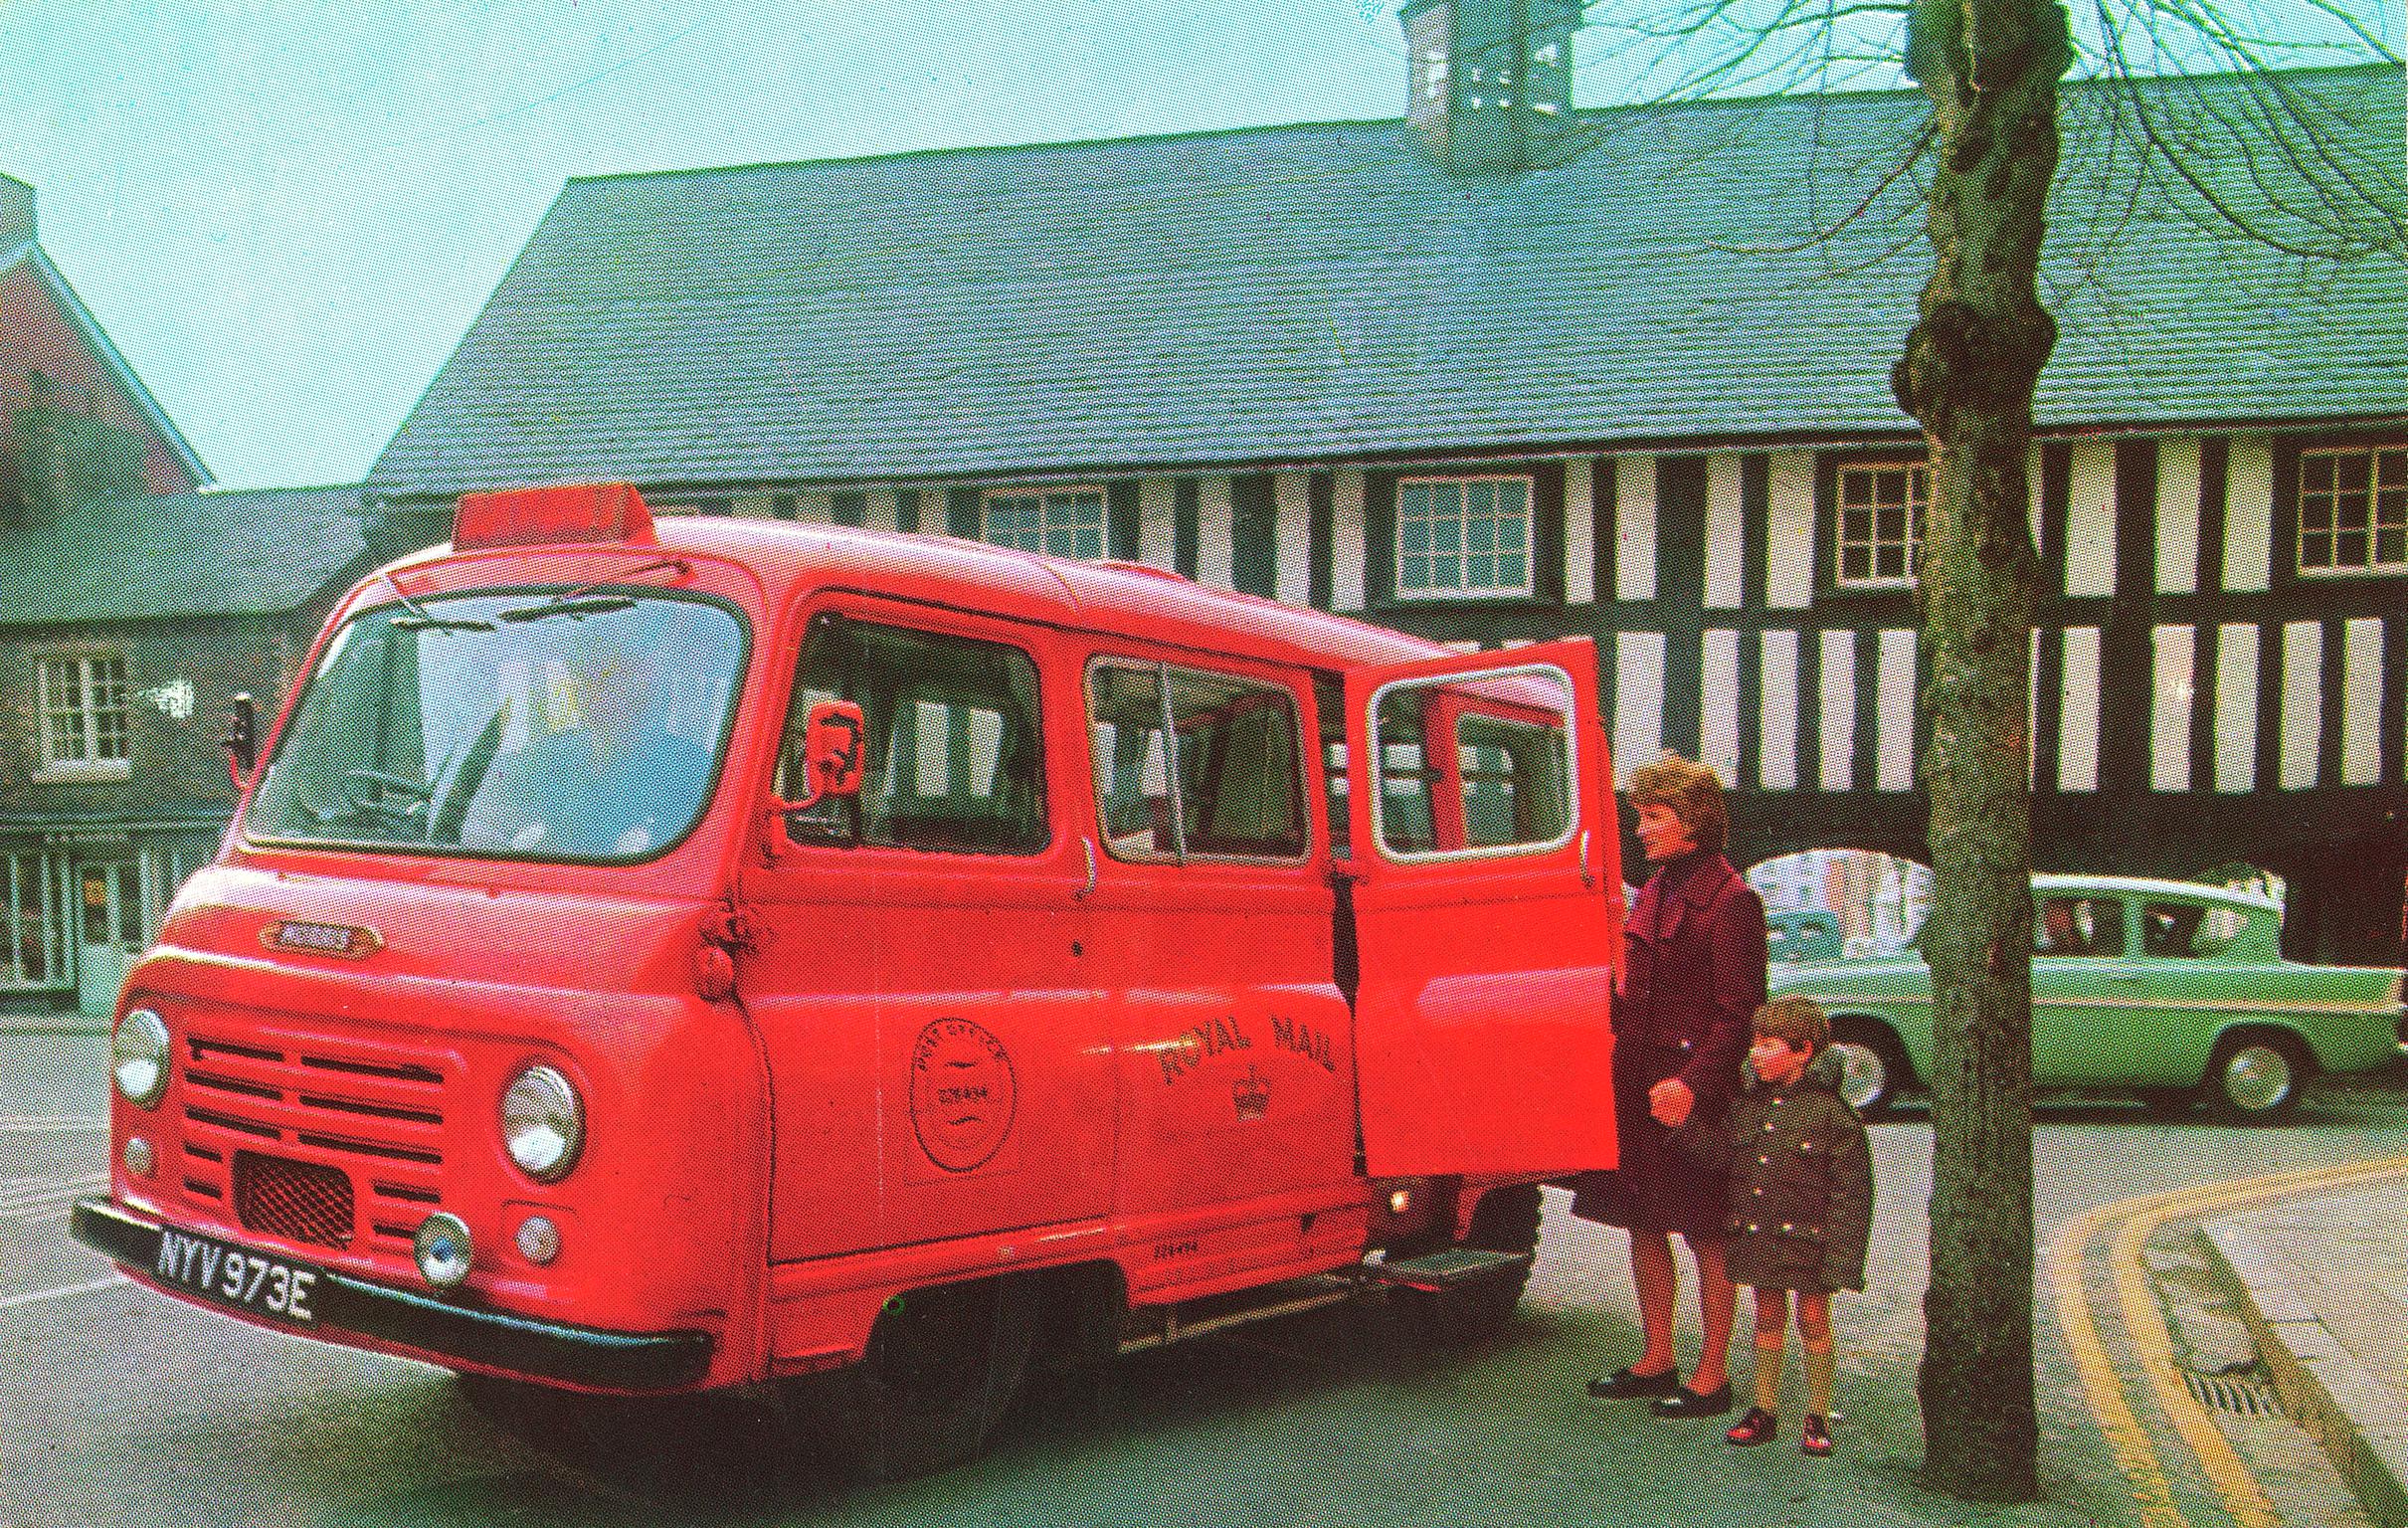 Postal Mini-Bus Llanidloes, Powys (postcard)